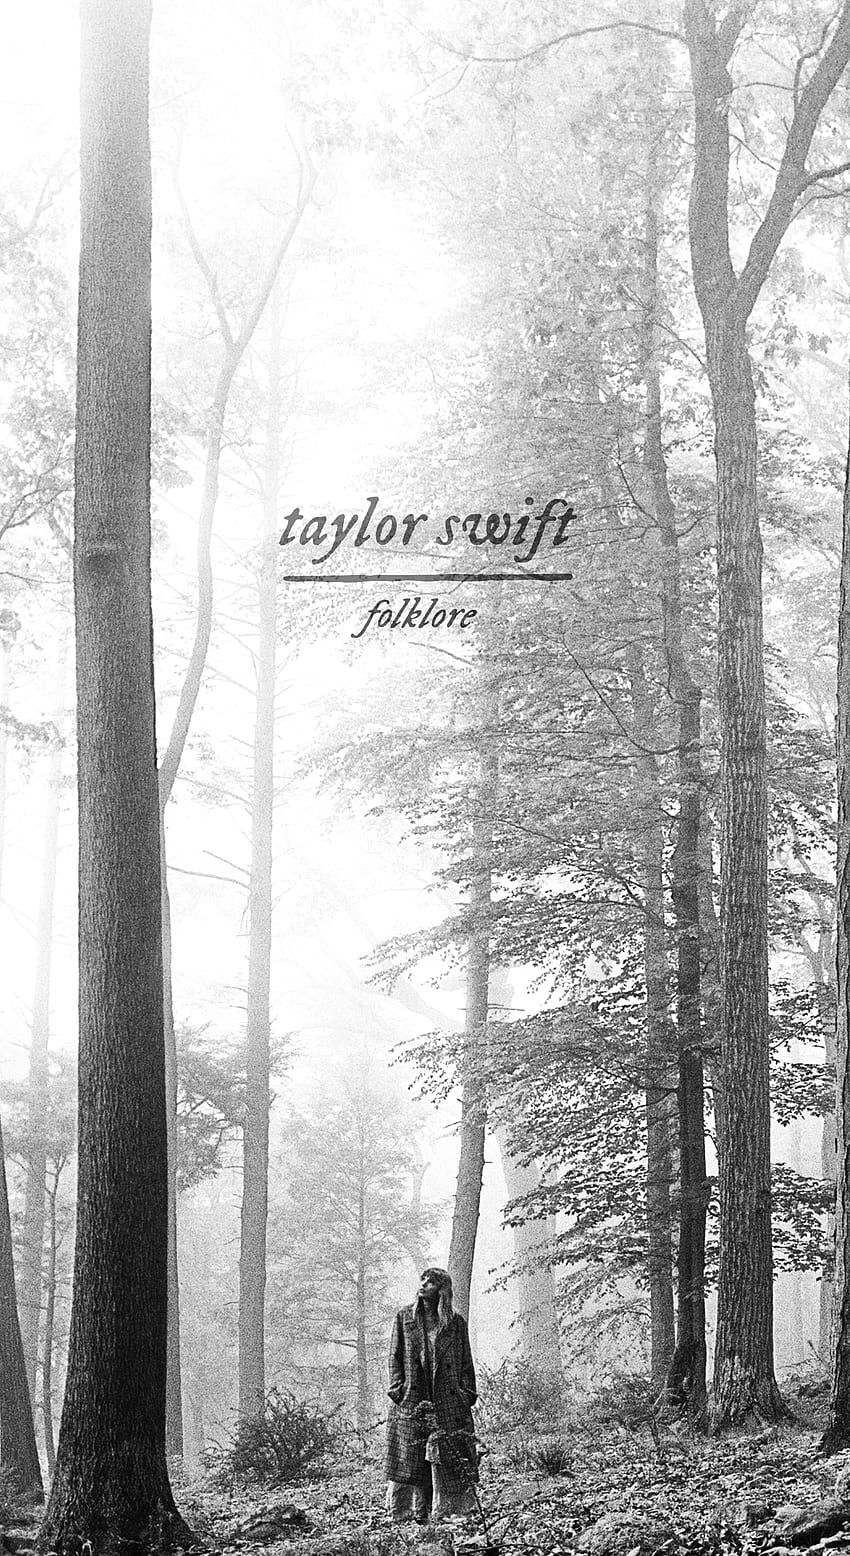 Cerita Rakyat Taylor Swift, Album Taylor Swift wallpaper ponsel HD